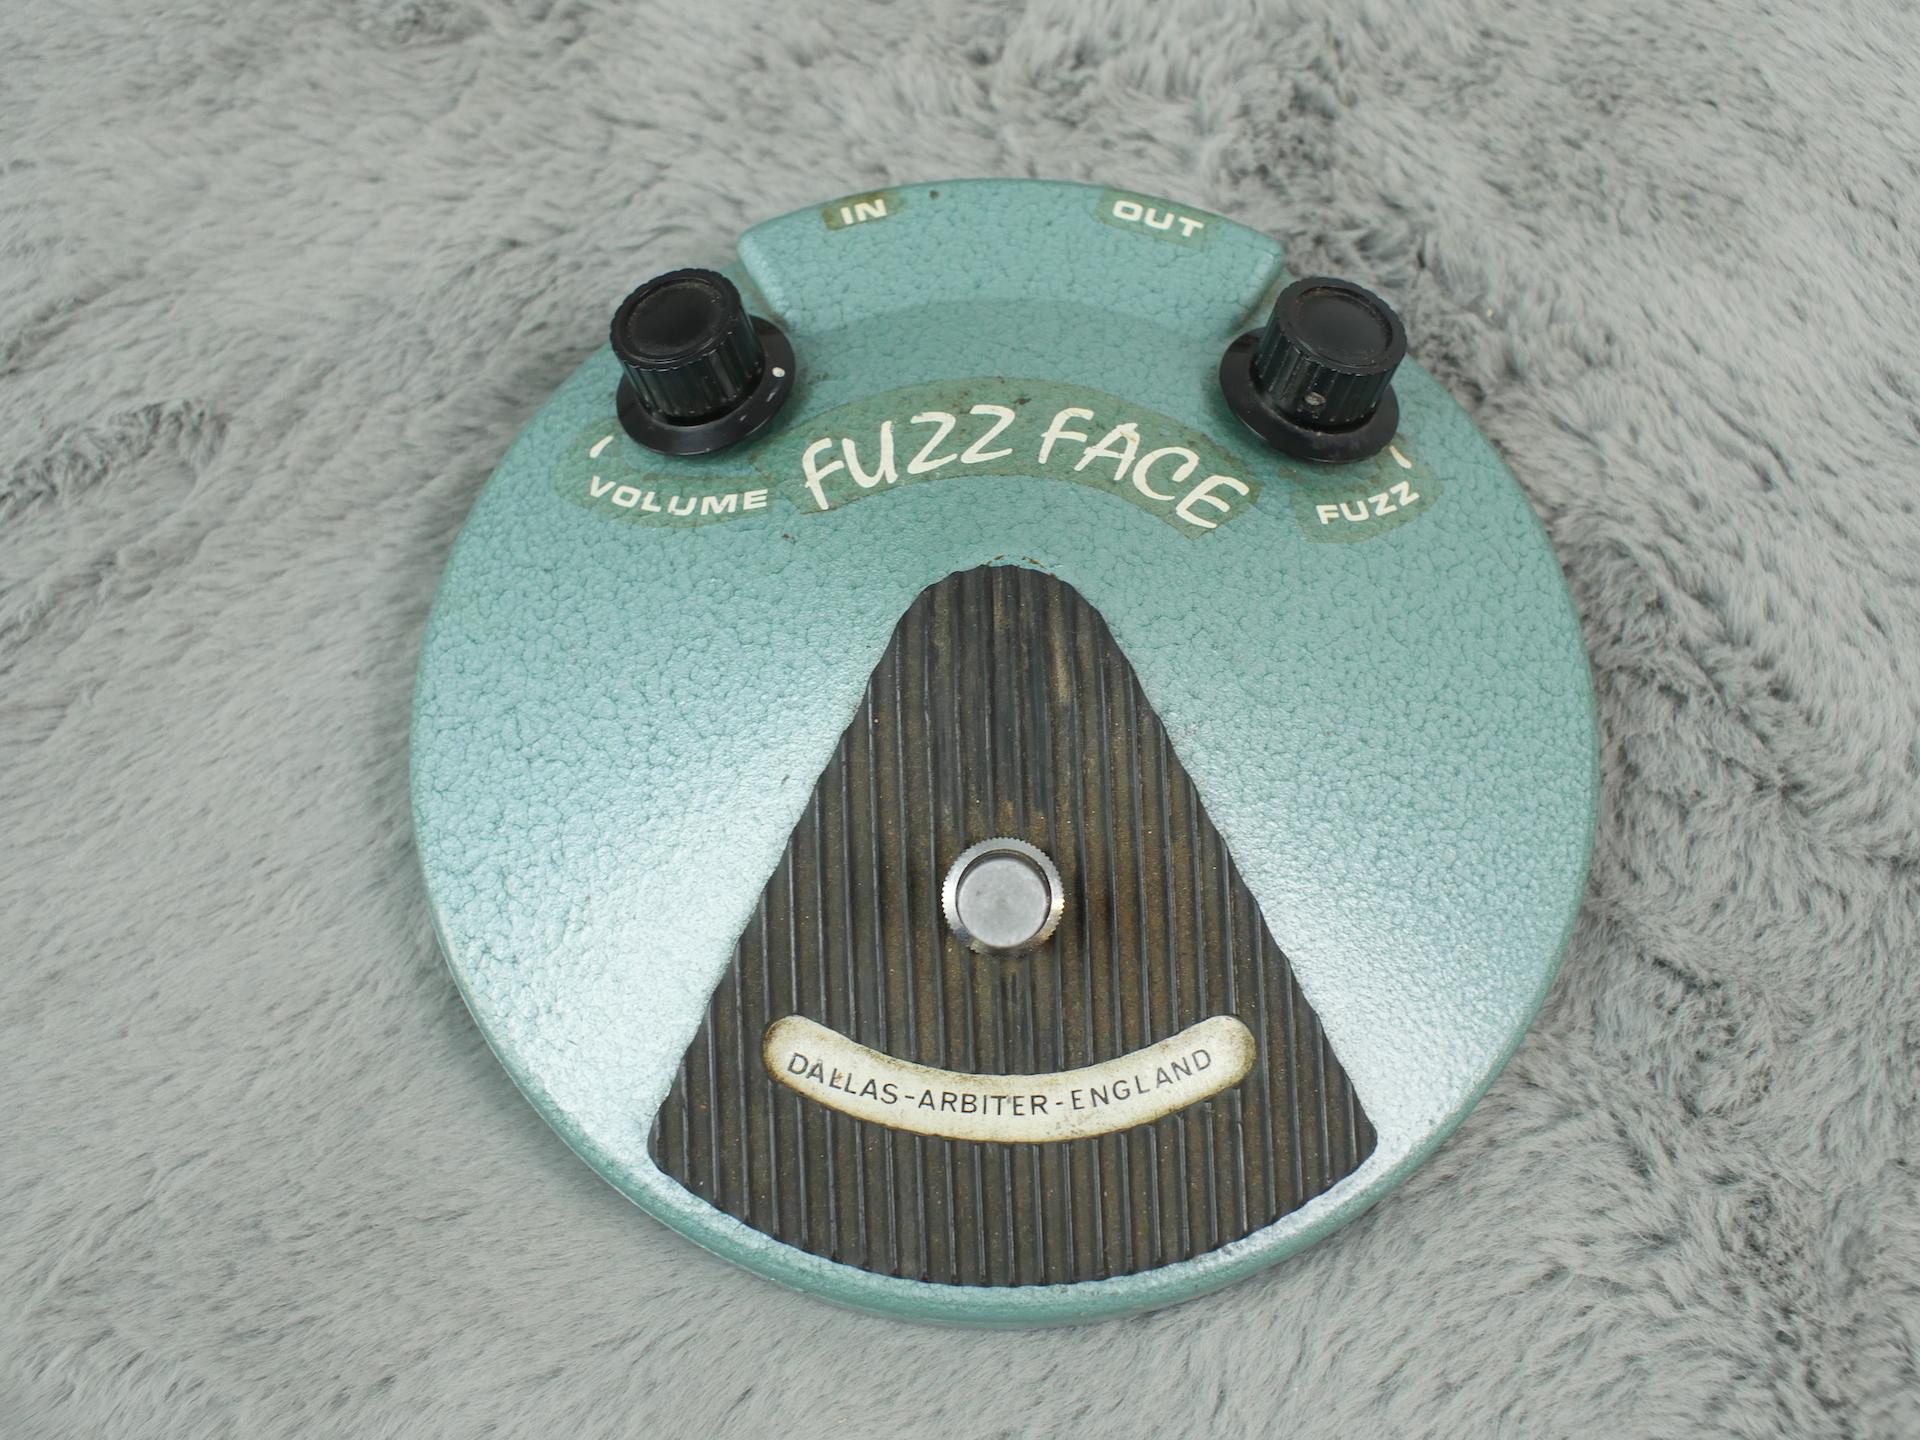 1971 Dallas Arbiter Fuzz Face